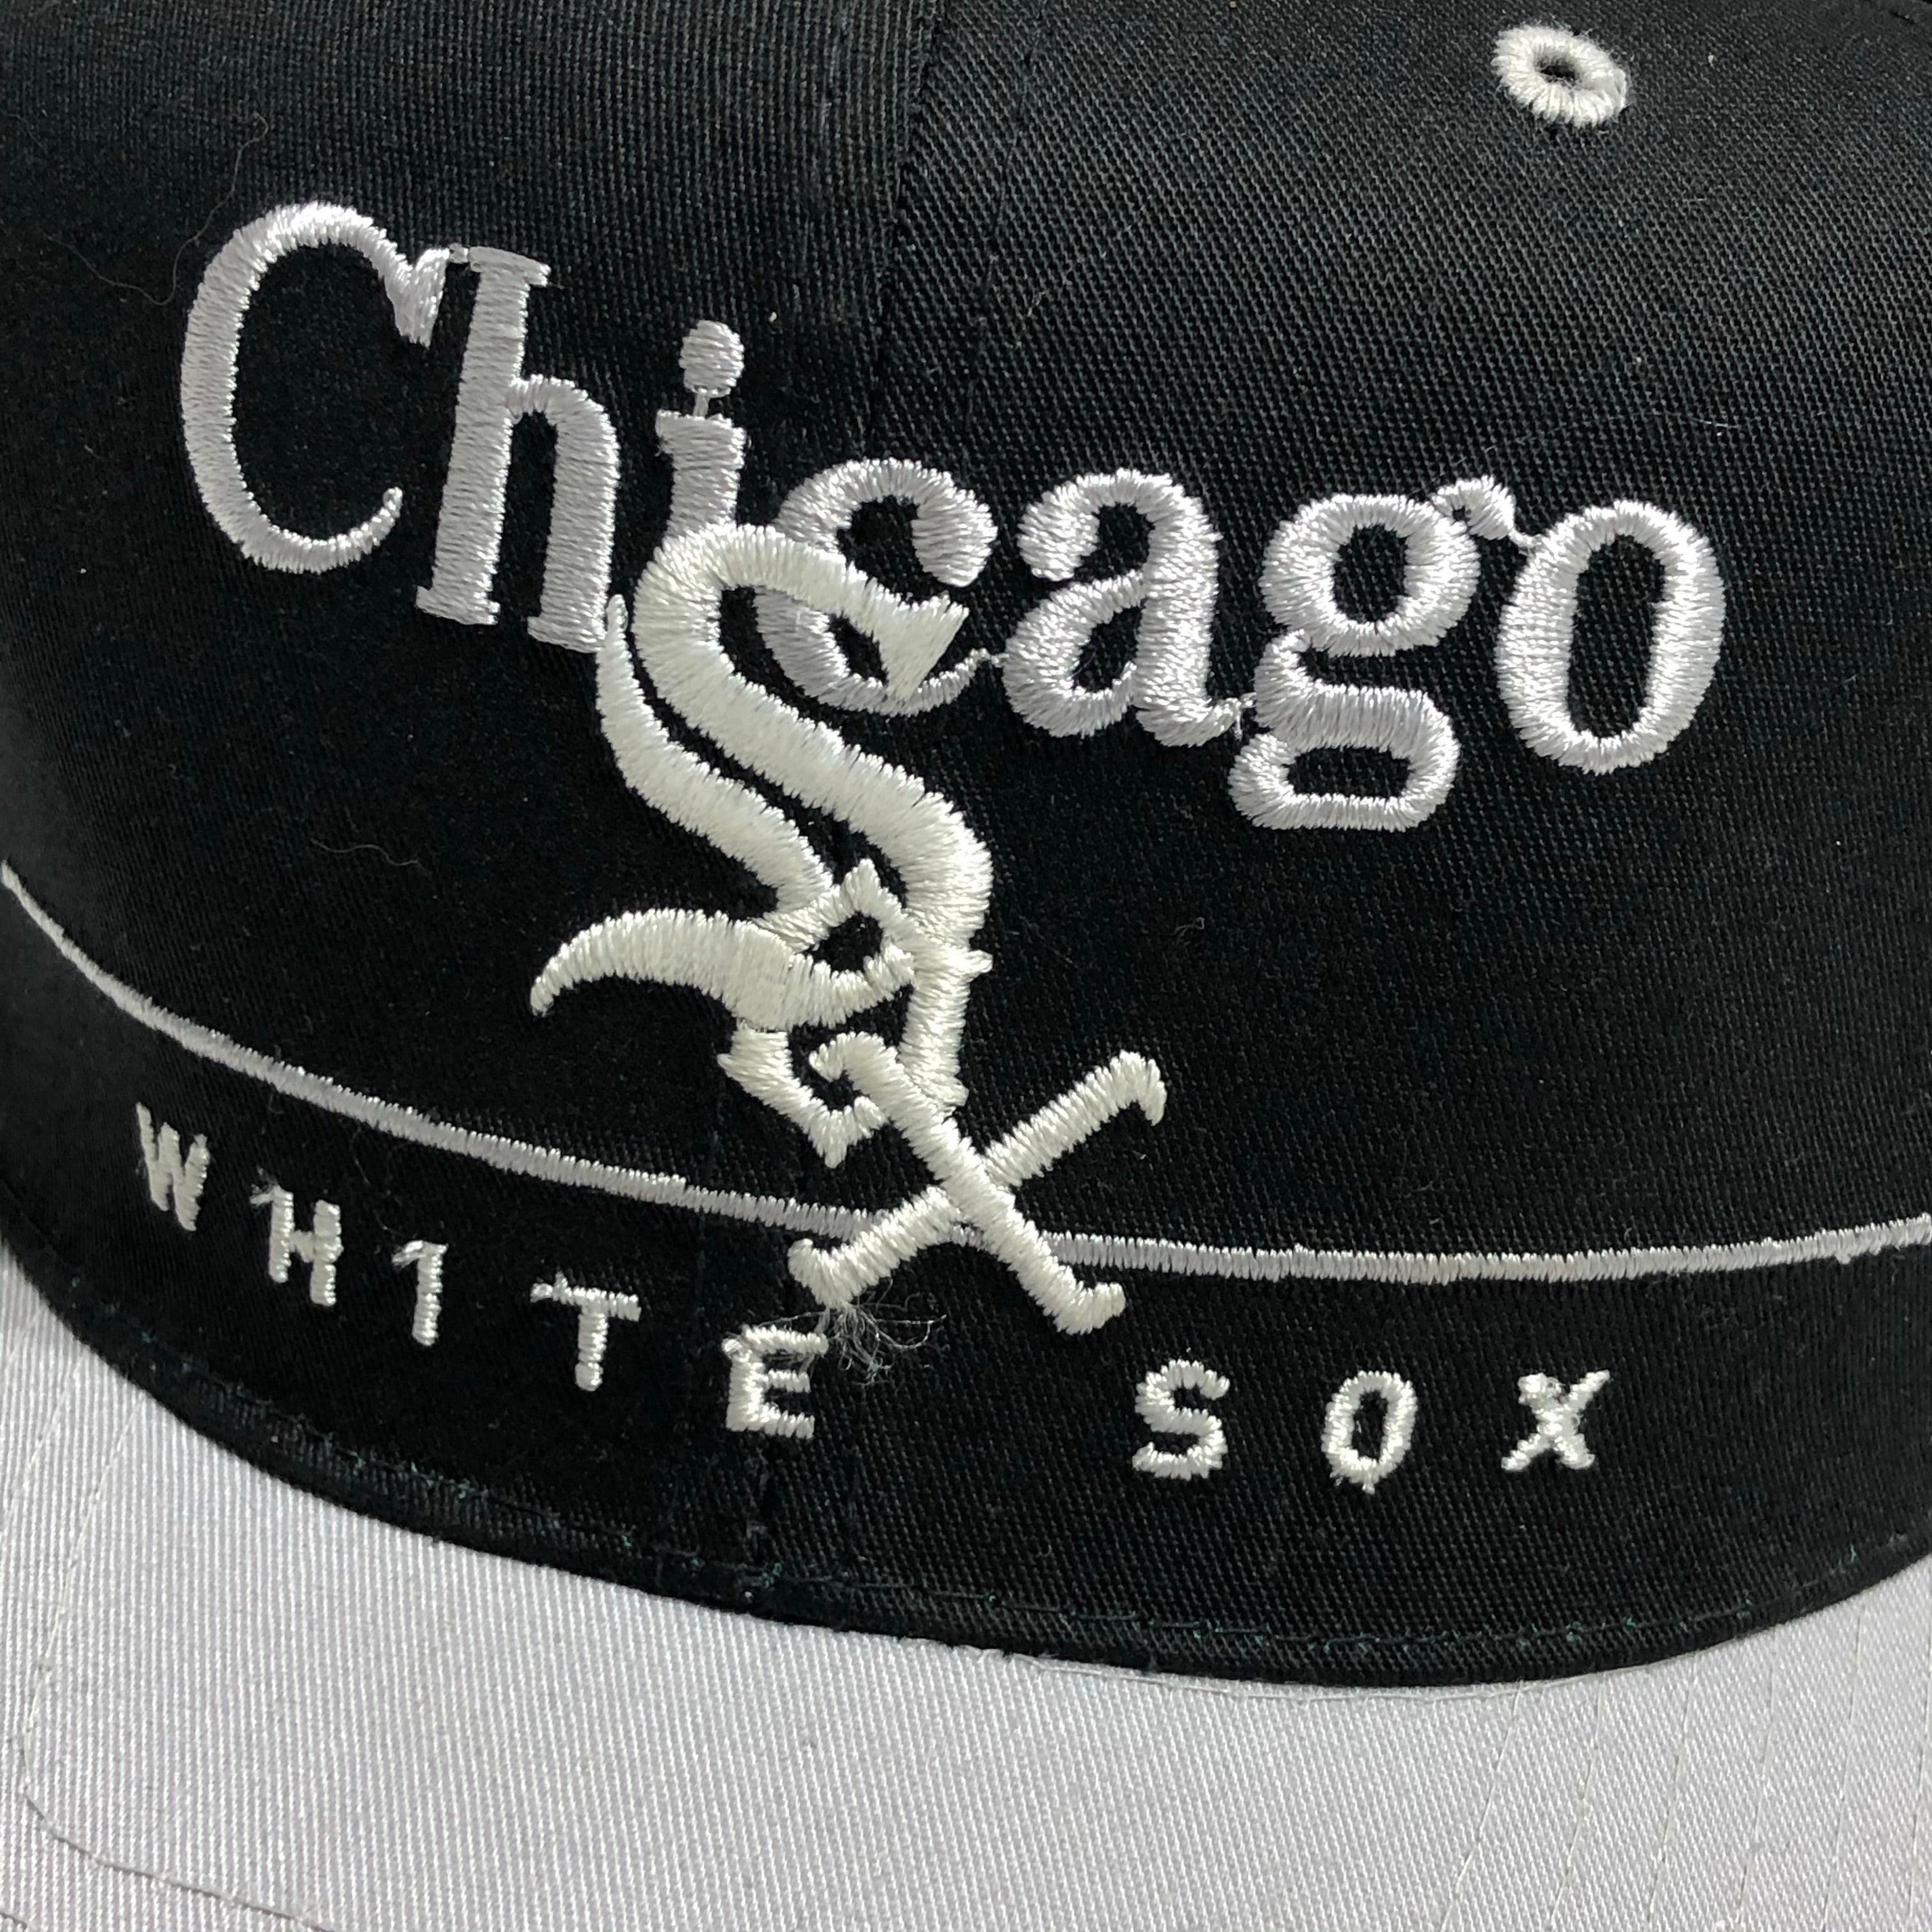 Vintage White Sox Snapback